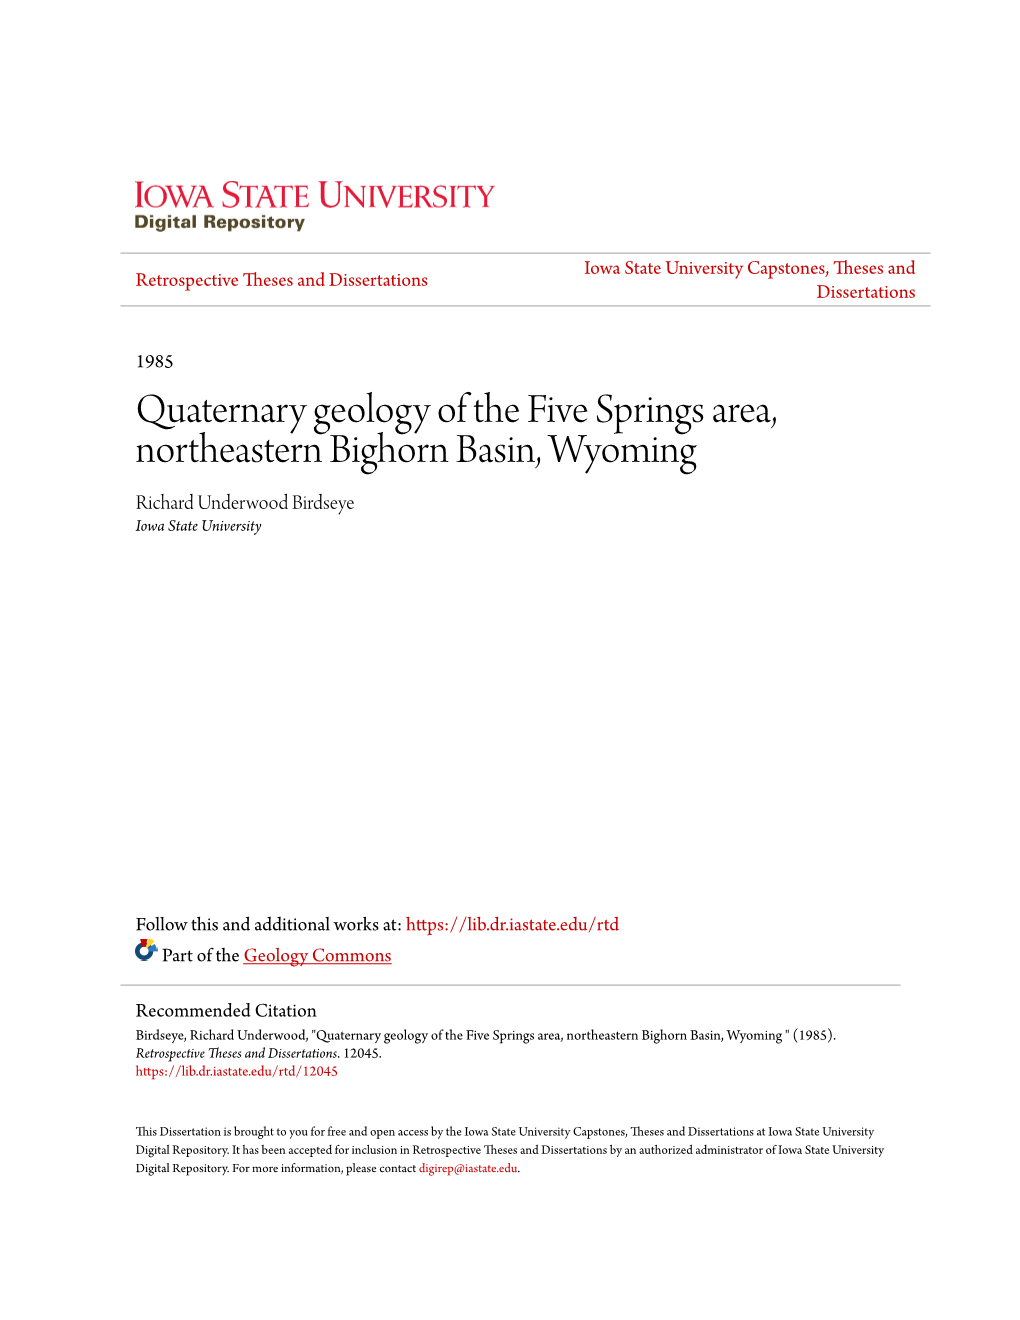 Quaternary Geology of the Five Springs Area, Northeastern Bighorn Basin, Wyoming Richard Underwood Birdseye Iowa State University